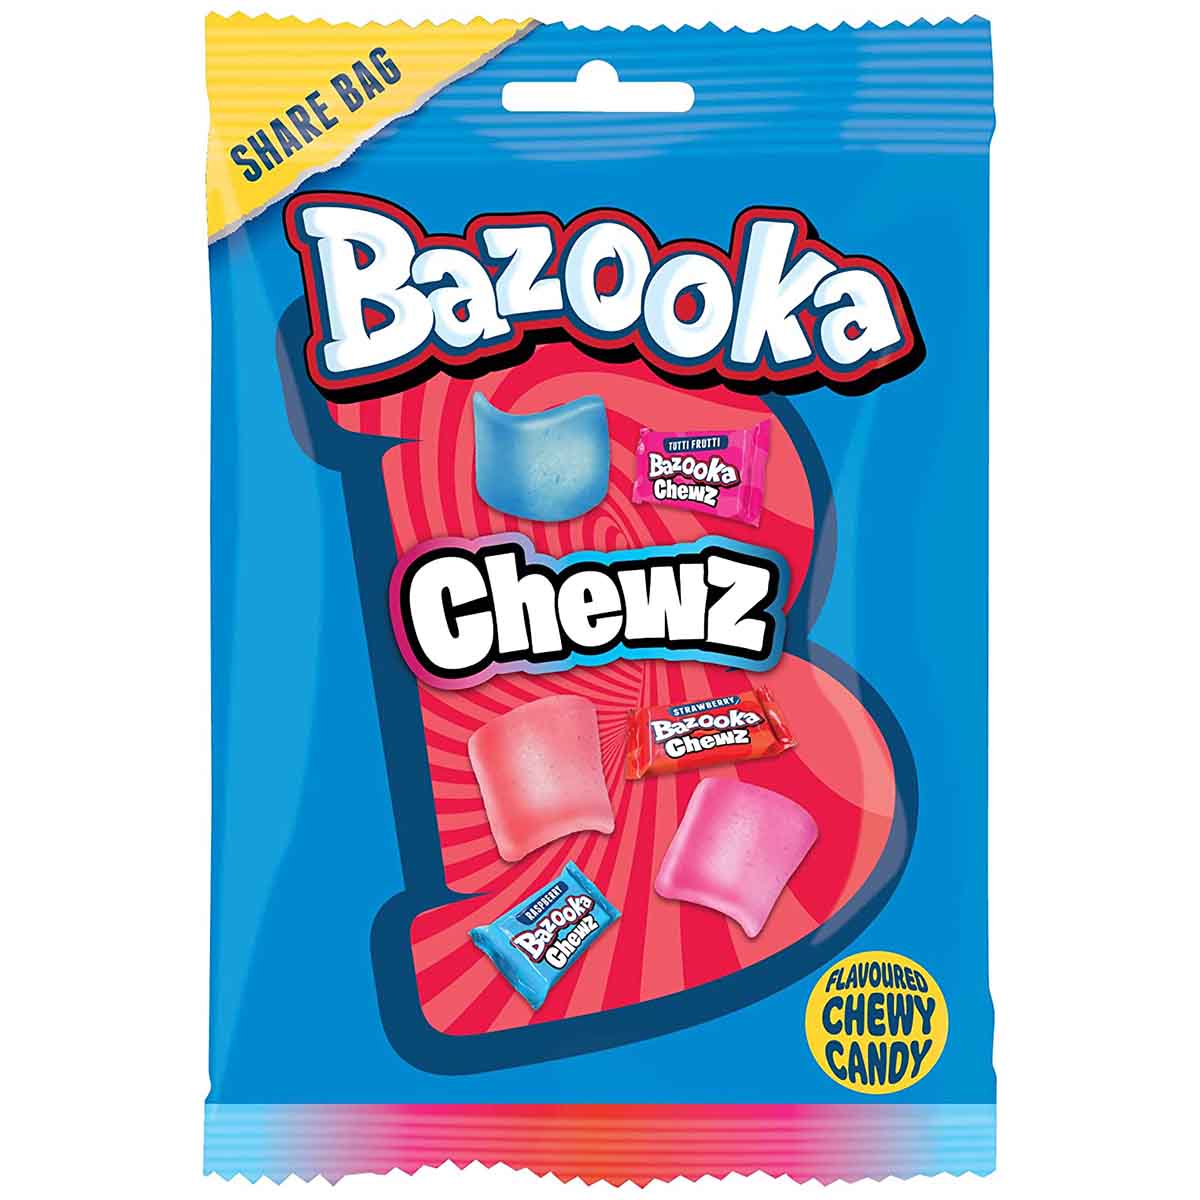 Godis bazooka chews bags 120 g